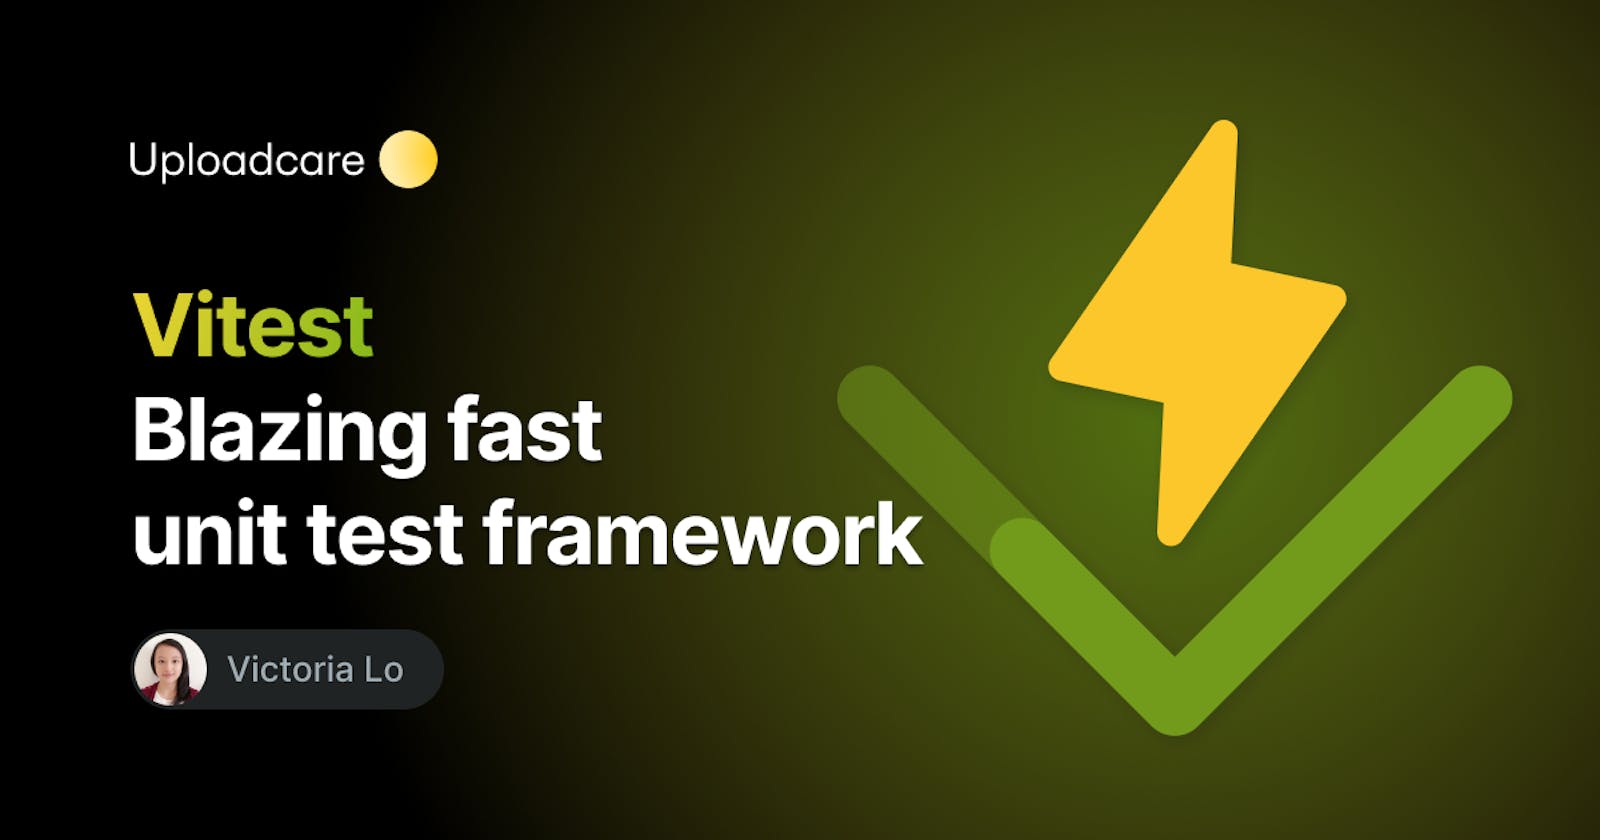 Vitest: Blazing fast unit test framework